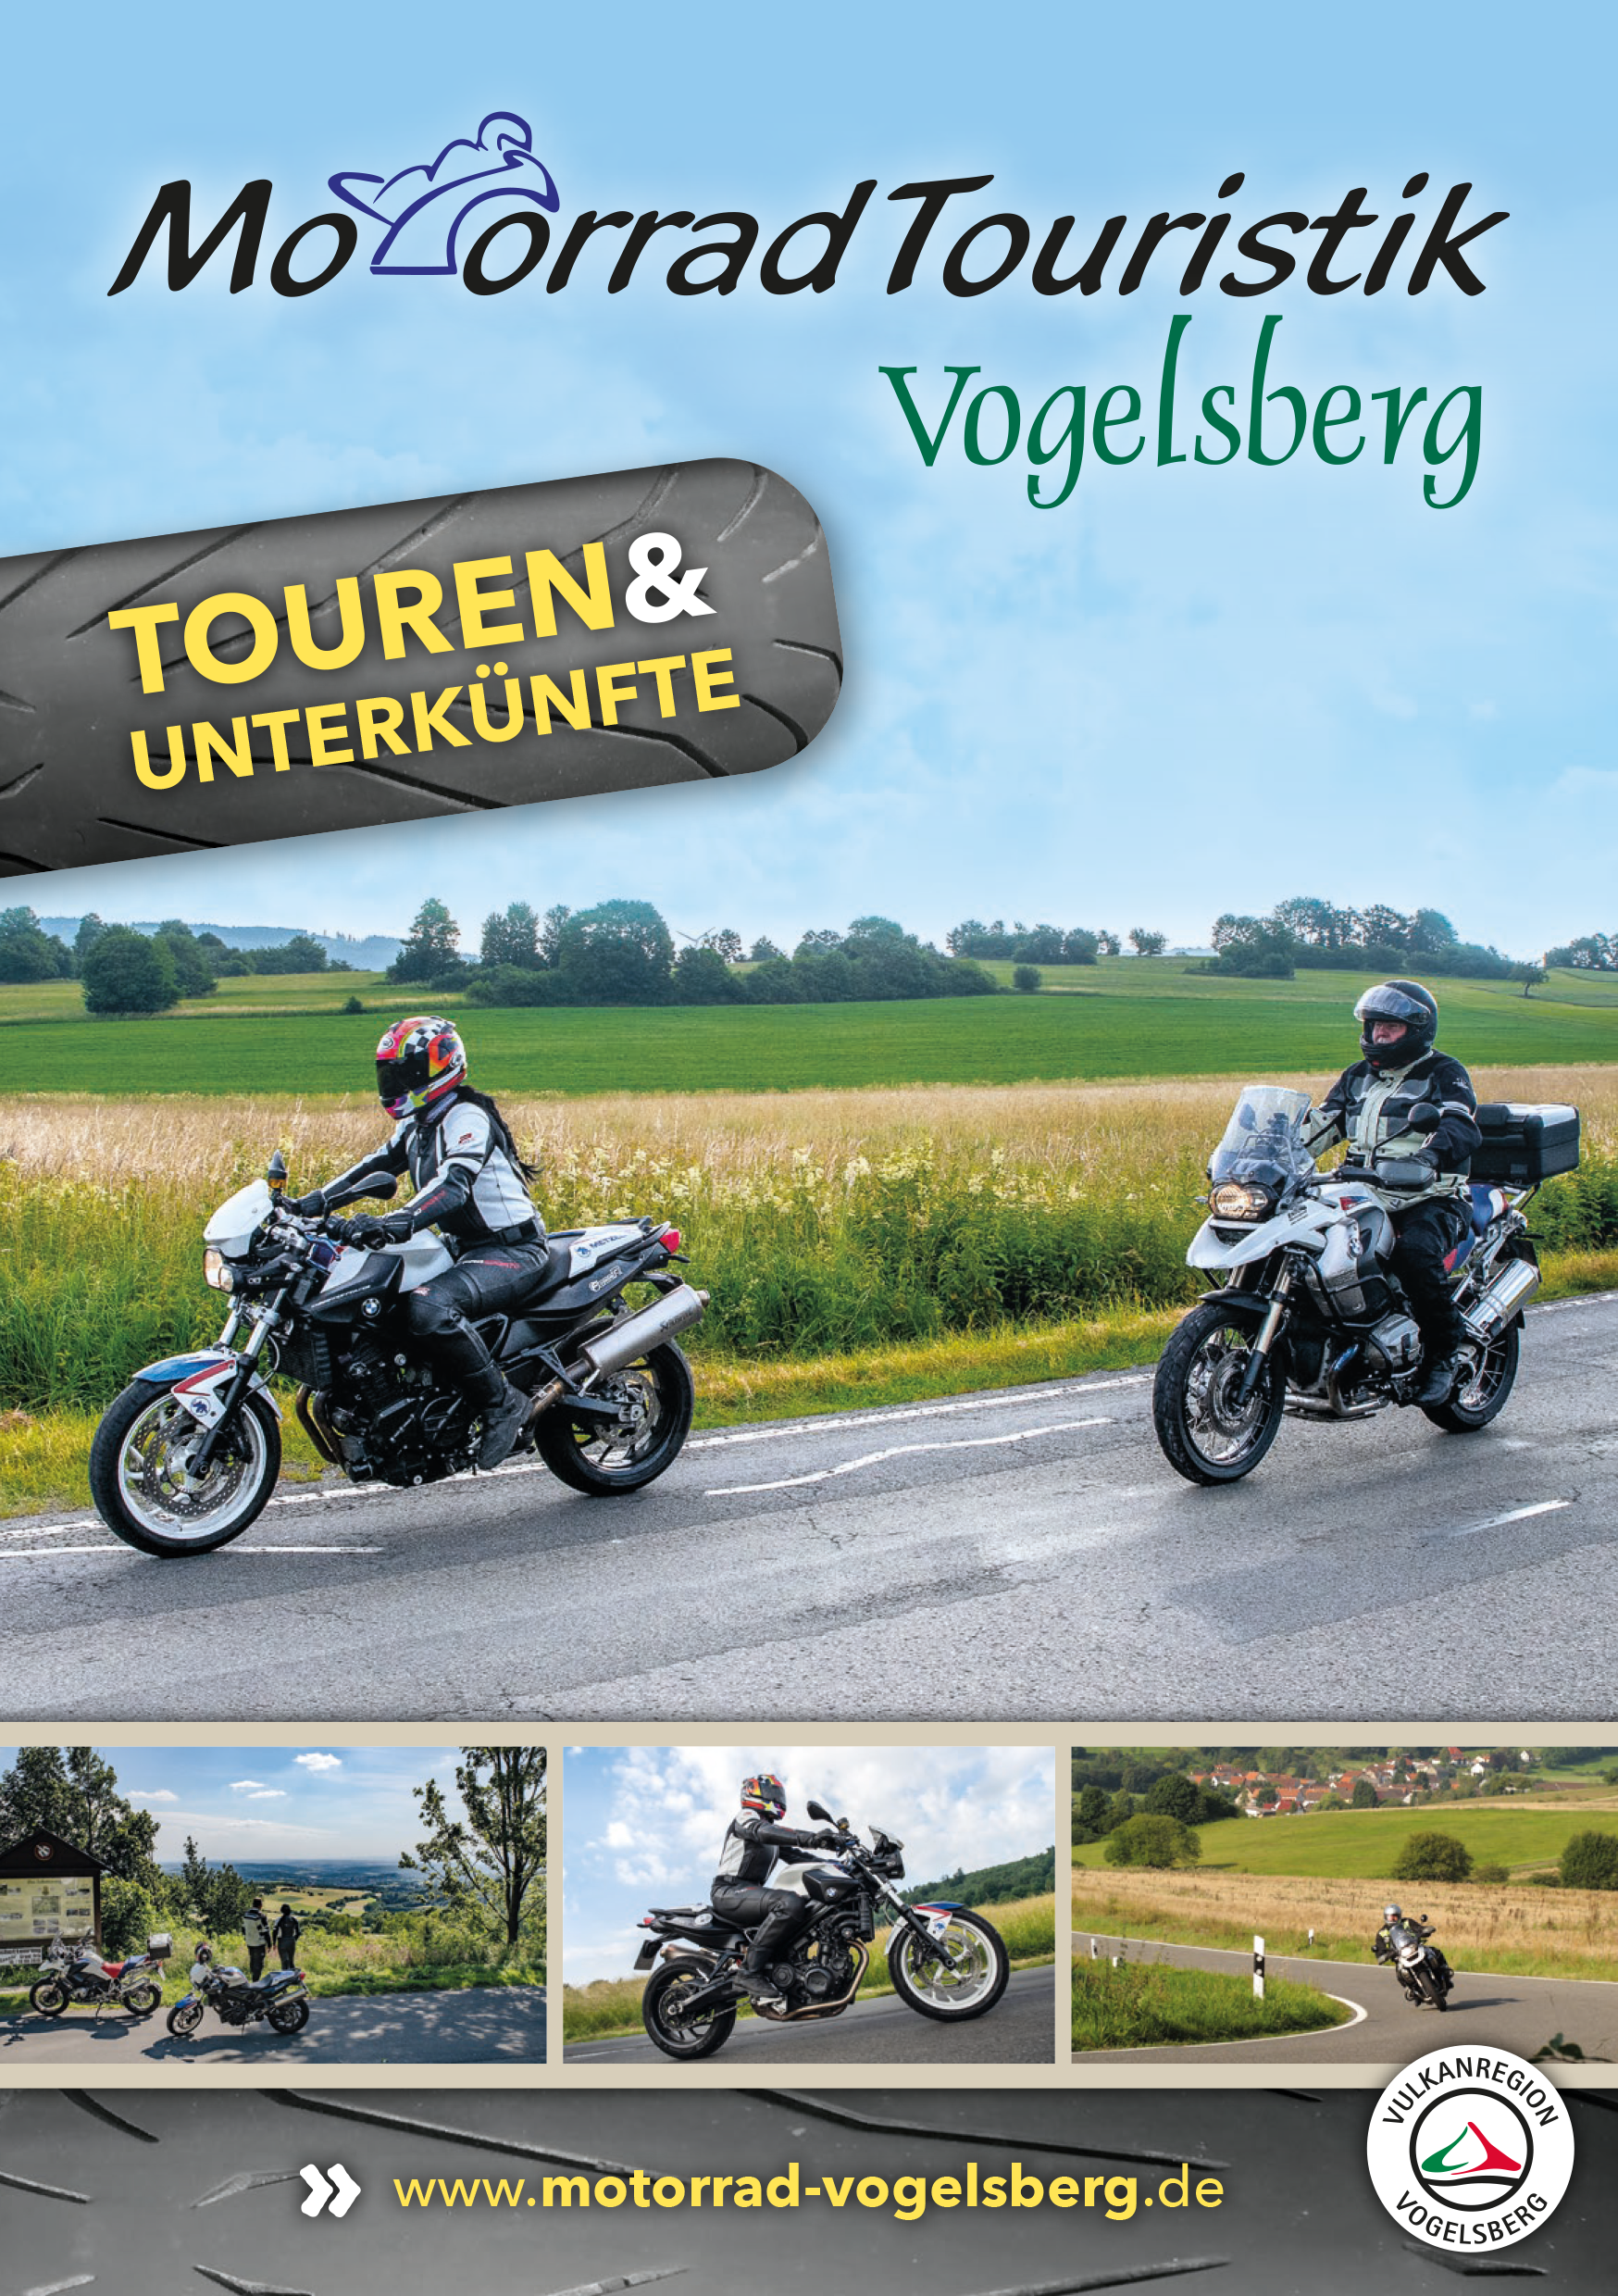 Motorrad-Touristik Vogelsberg